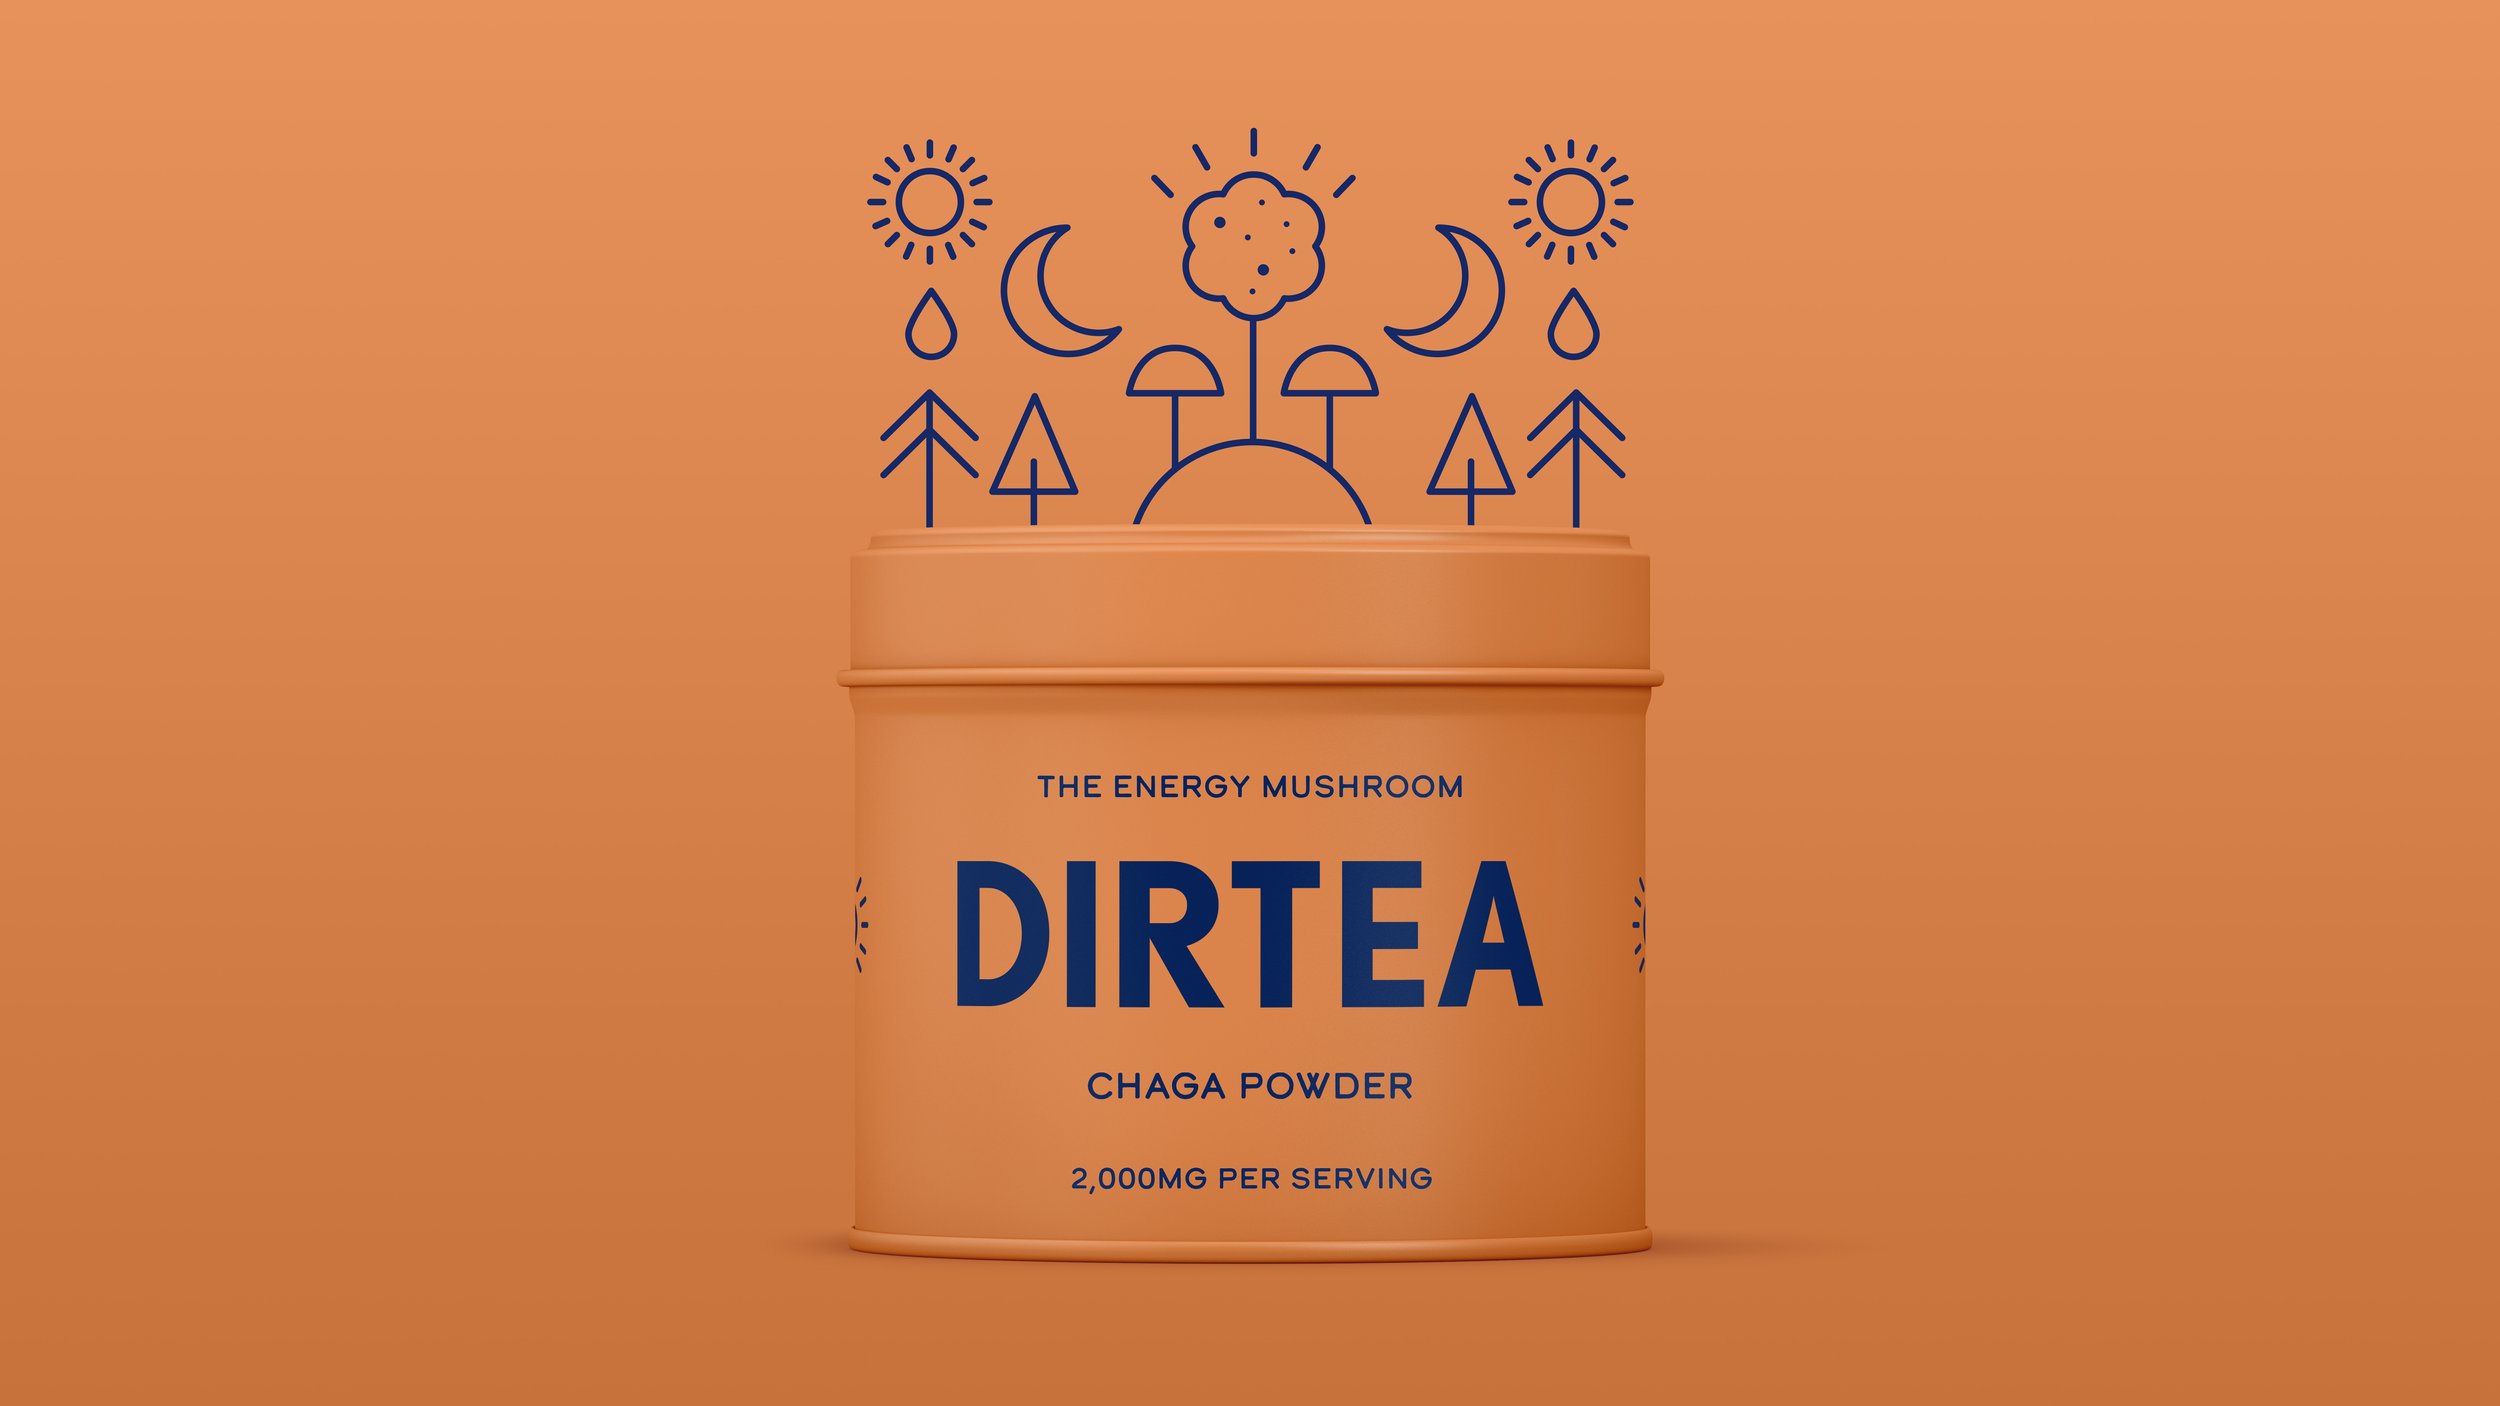 Dirtea brand creation